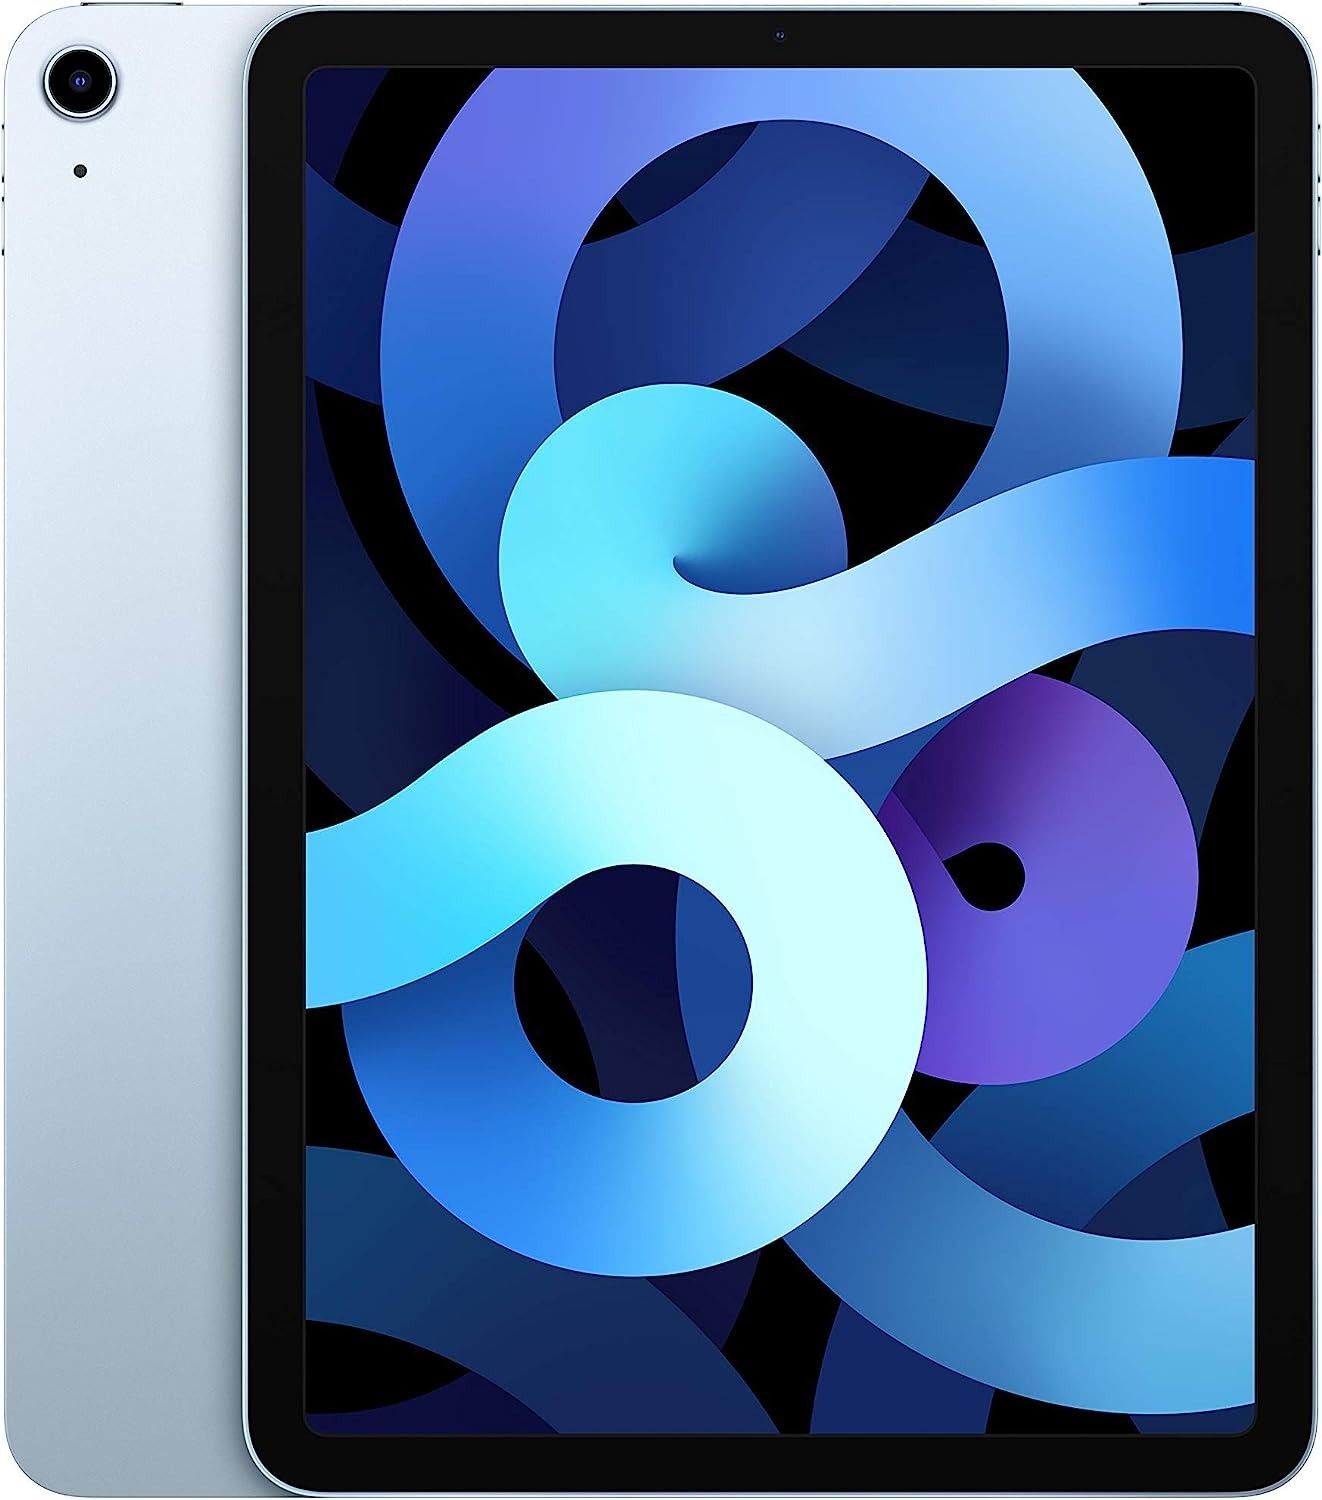 Apple iPad Air 4th Gen 64GB Wifi + Cellular (Unlocked) - Sky Blue (Used)